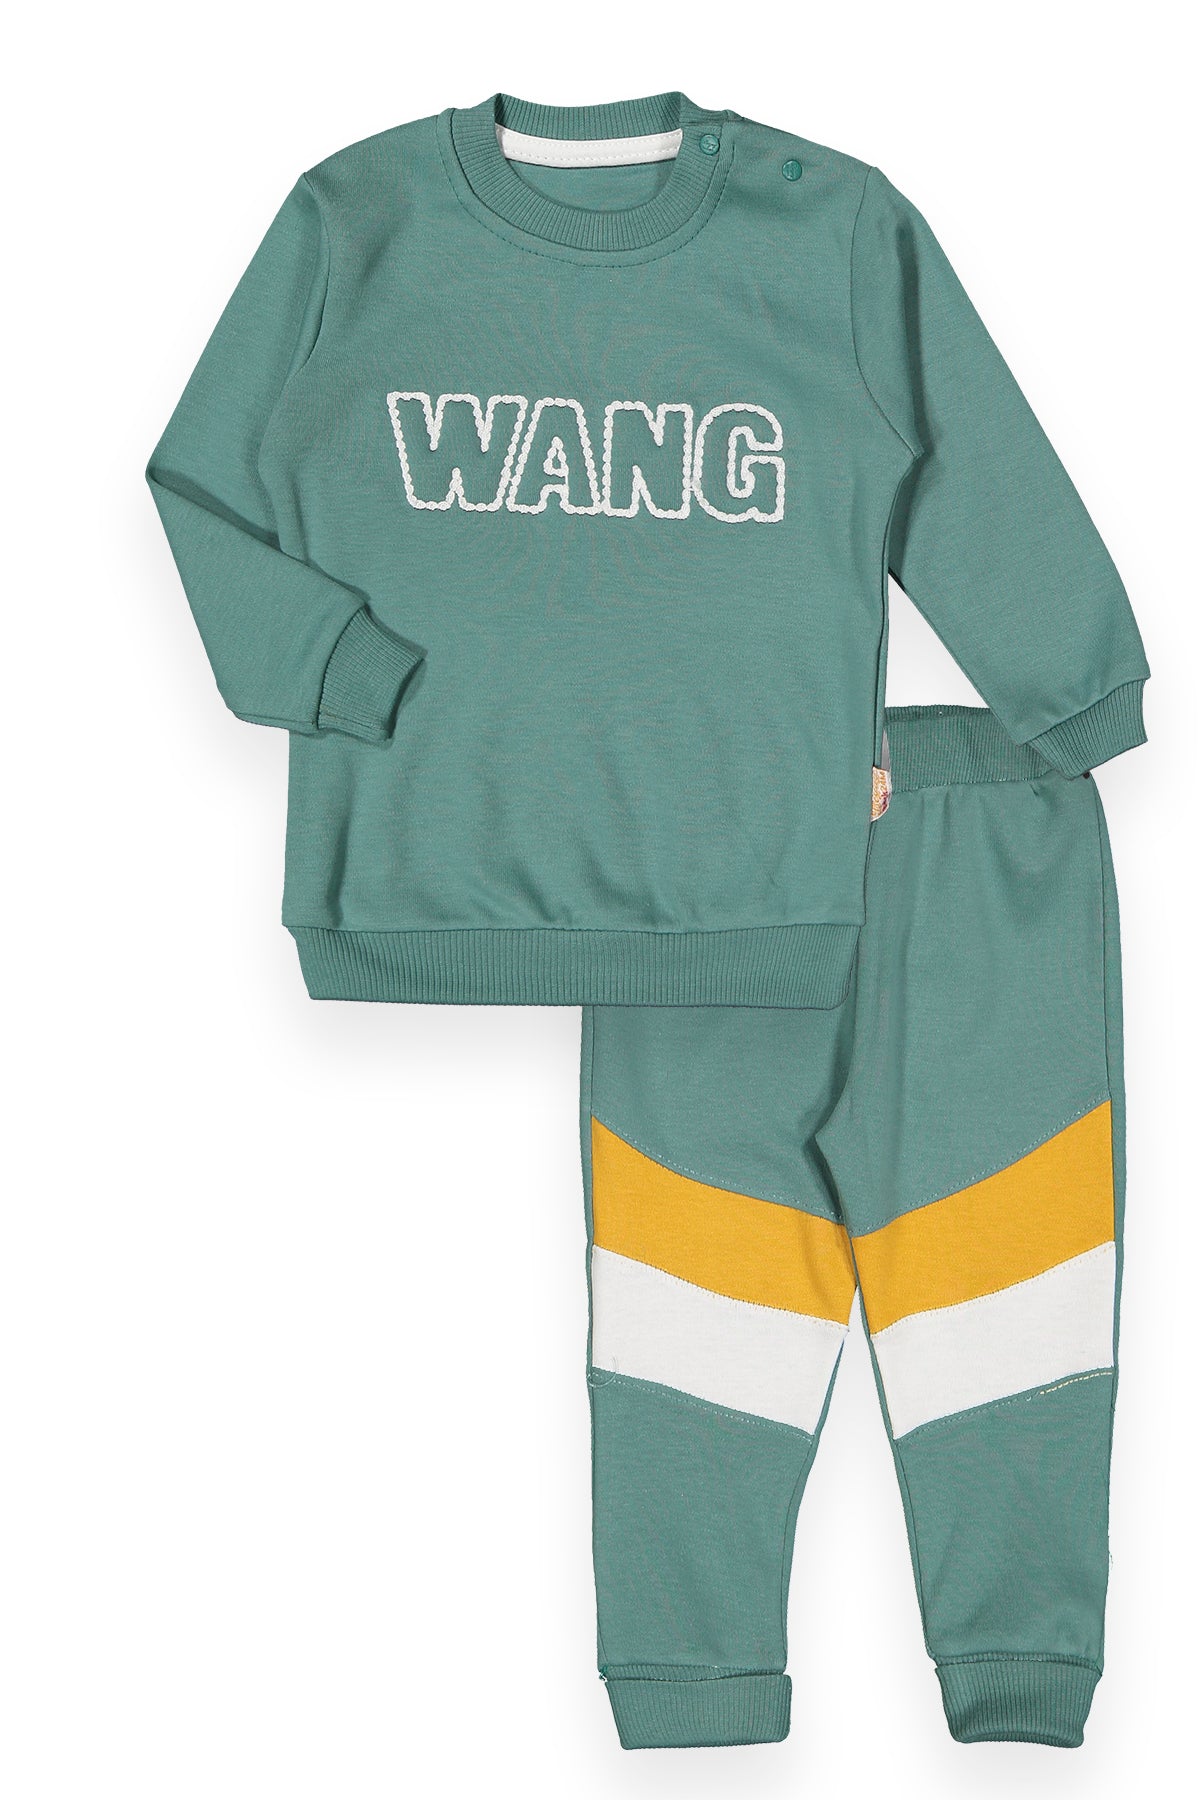 Freizeitset "Wang" in verschiedenen Farben- Jungen-1867BB